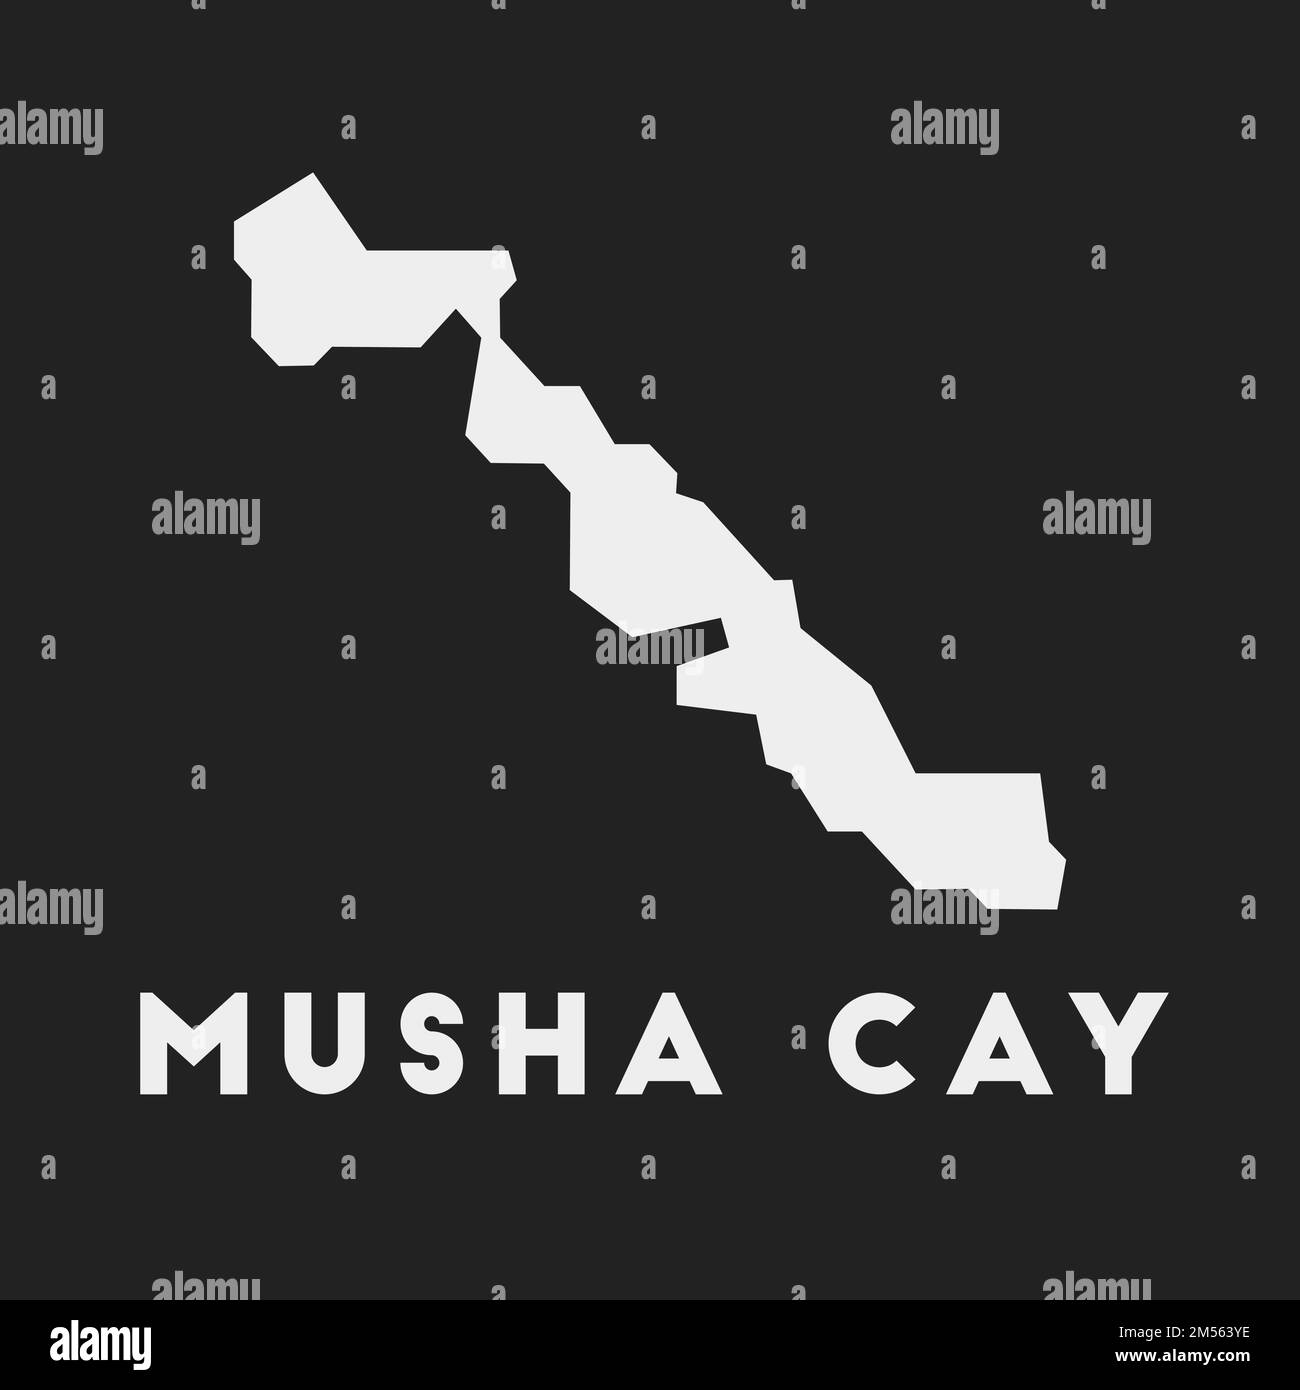 Musha Cay icon. Island map on dark background. Stylish Musha Cay map with island name. Vector illustration. Stock Vector